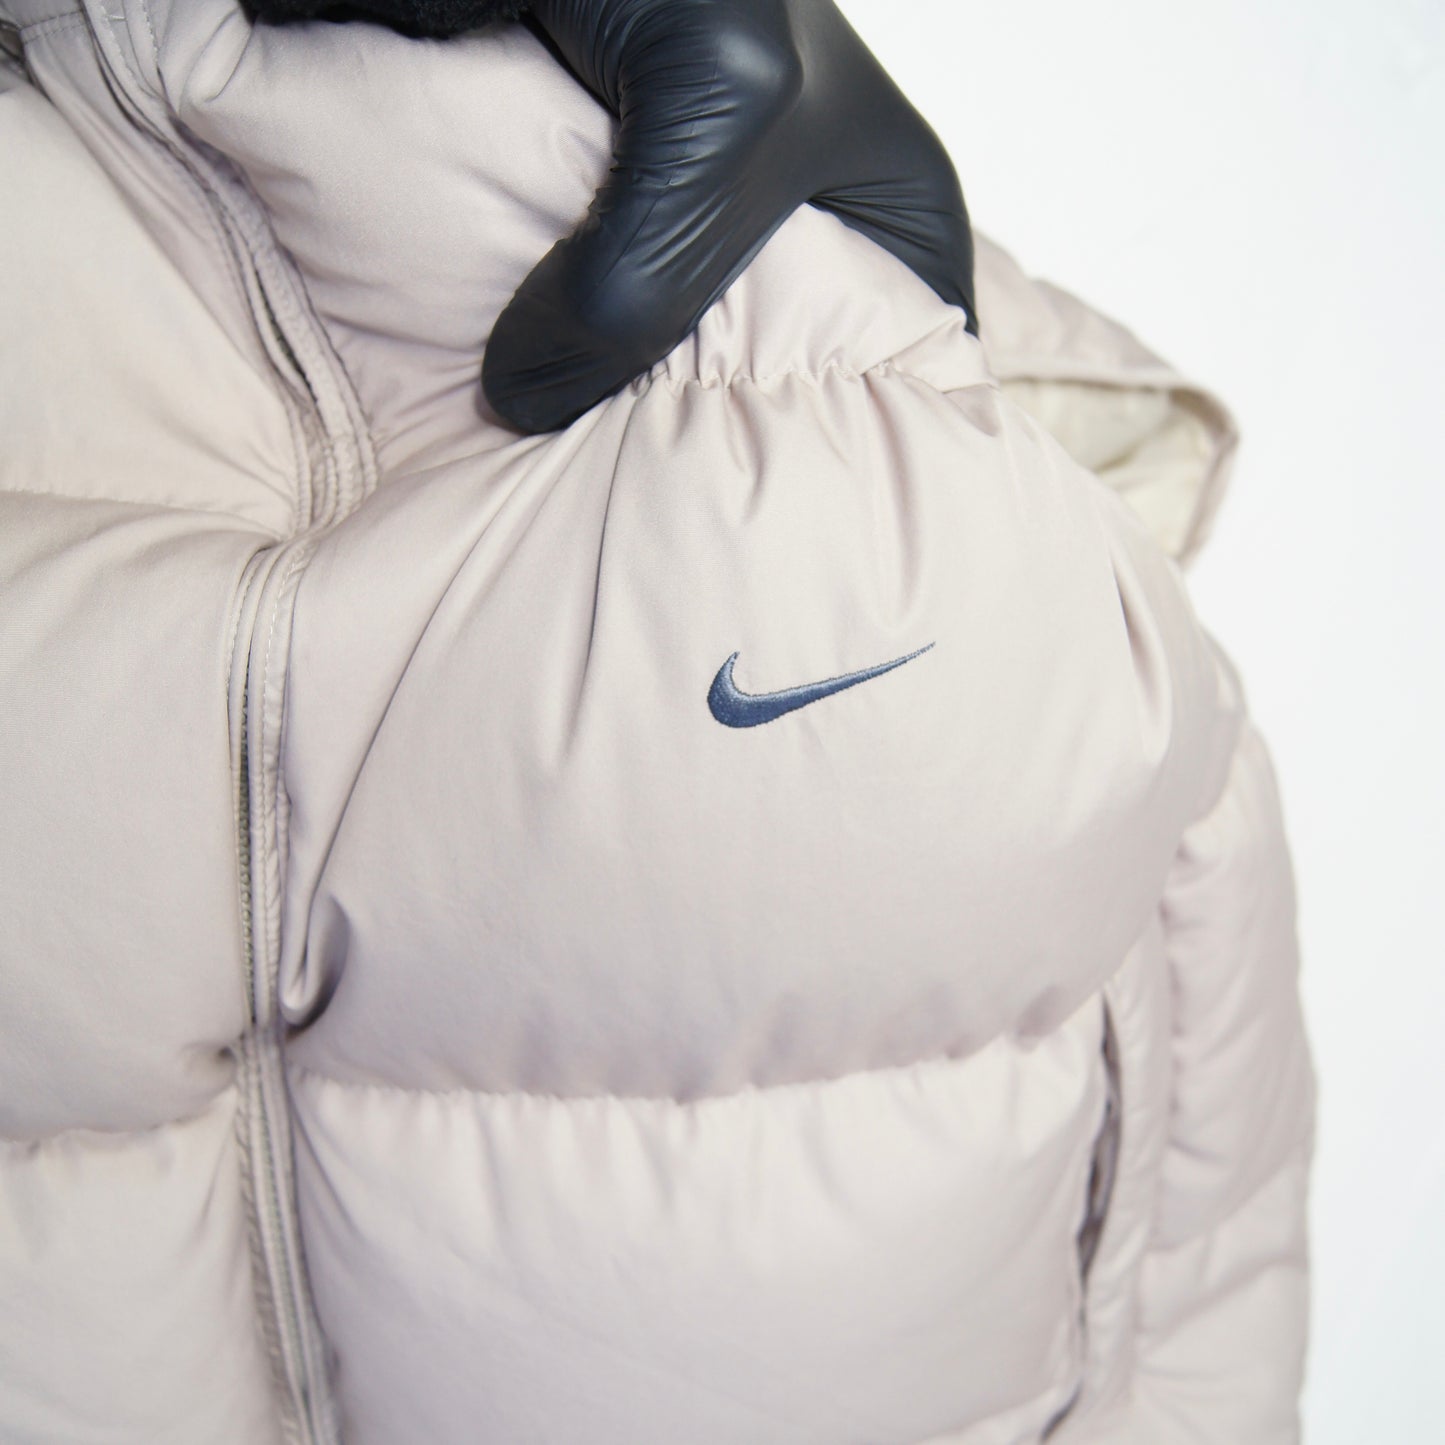 Nike Puffer Vest [XL]